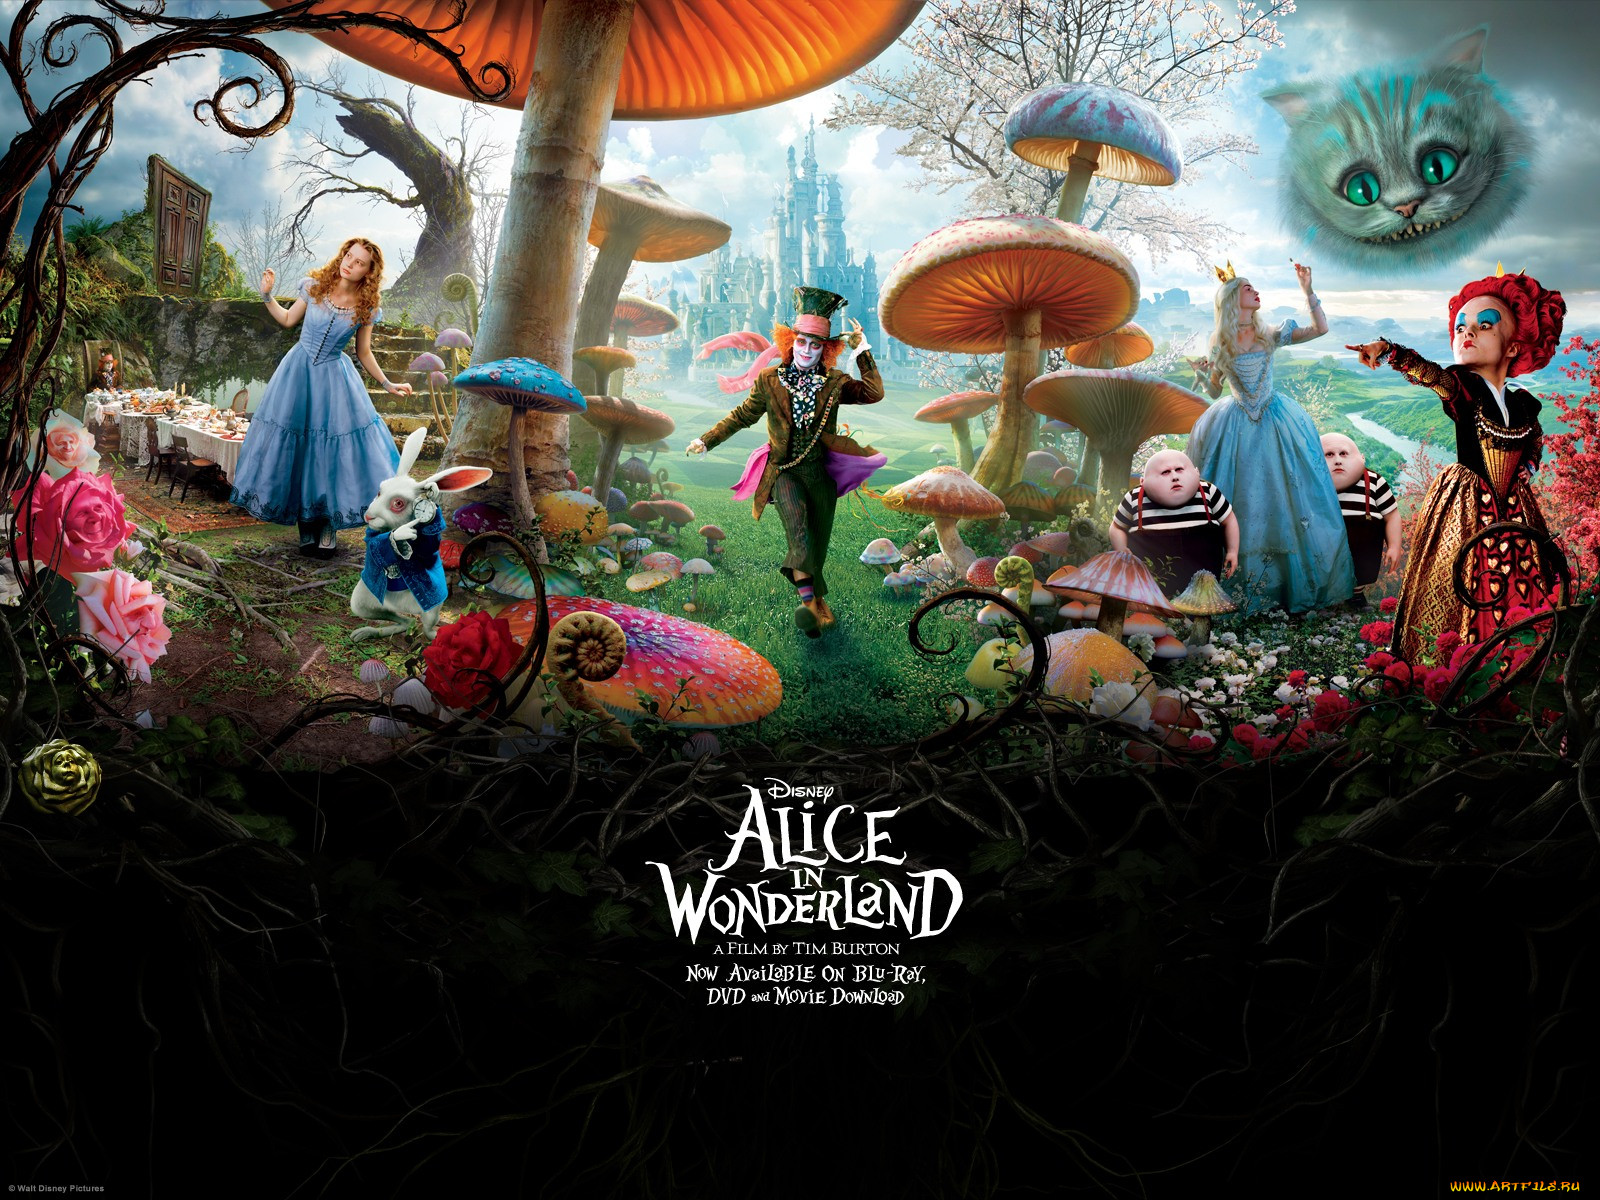 Alice in wooderland